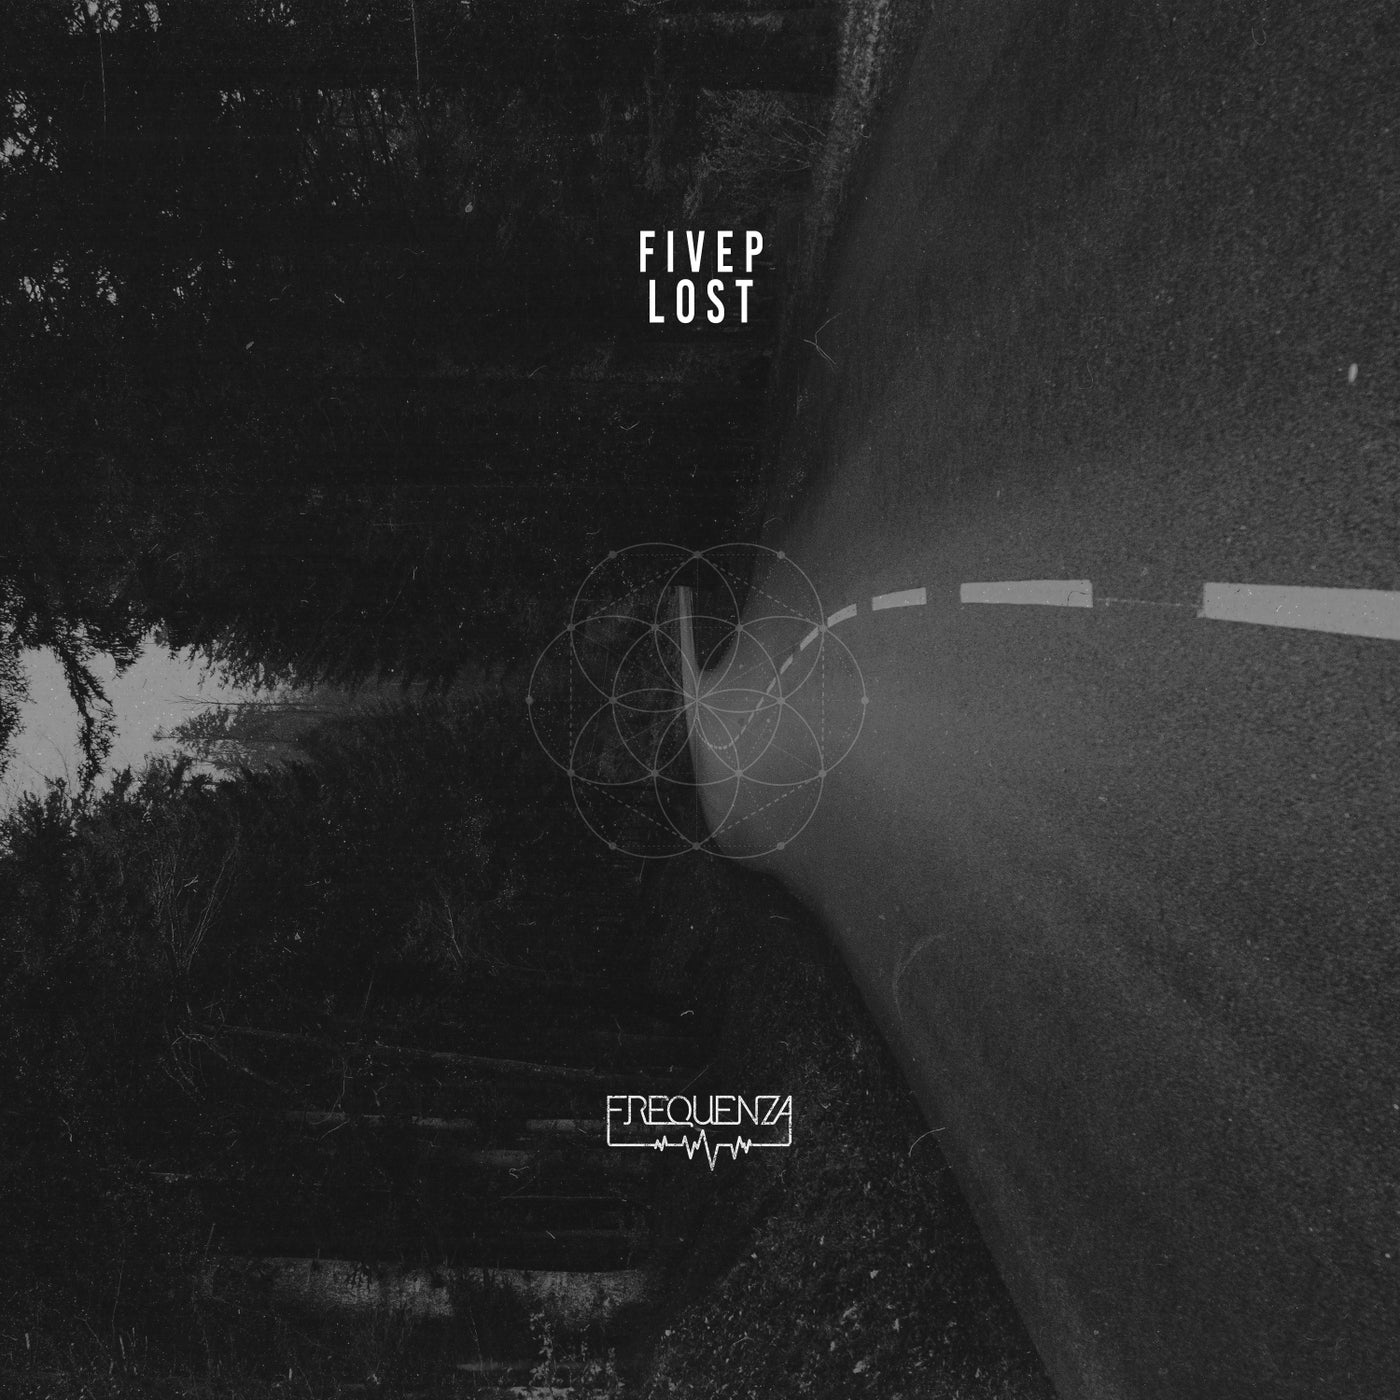 FiveP - Lost [FREQ2119]